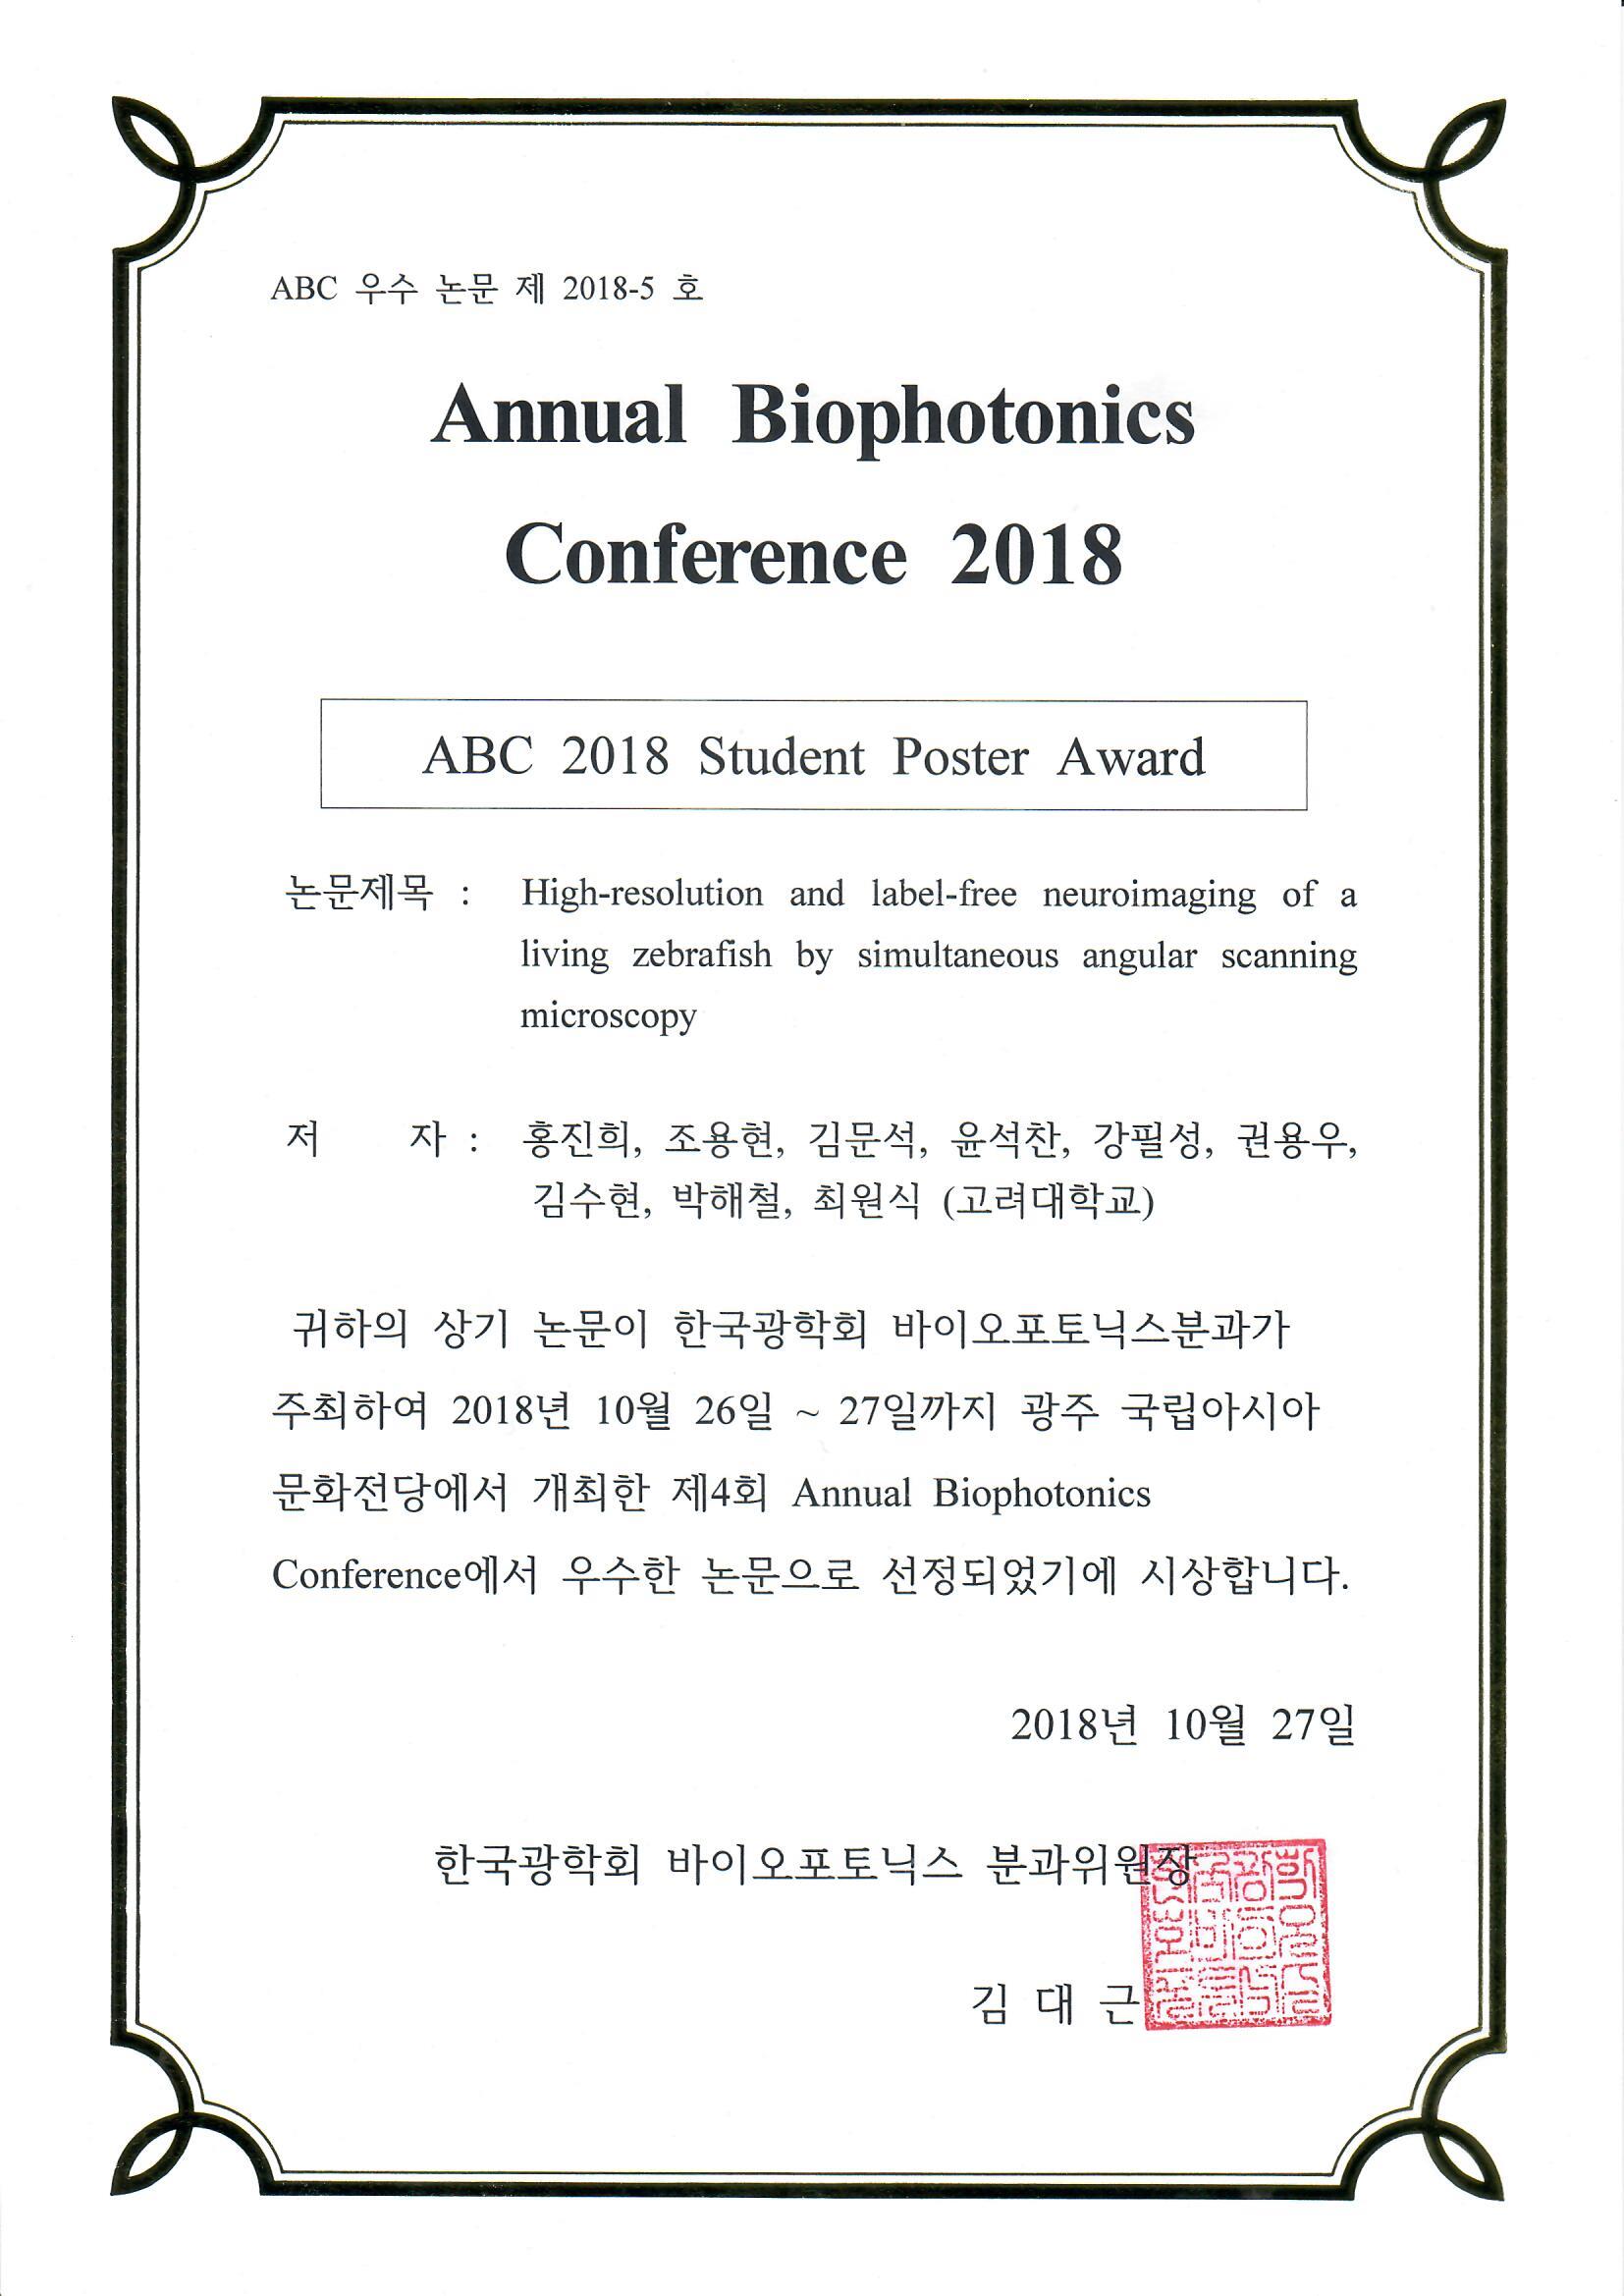 Best Poster Award in ABC 2018! (Prof. Wonshik Choi's Lab)